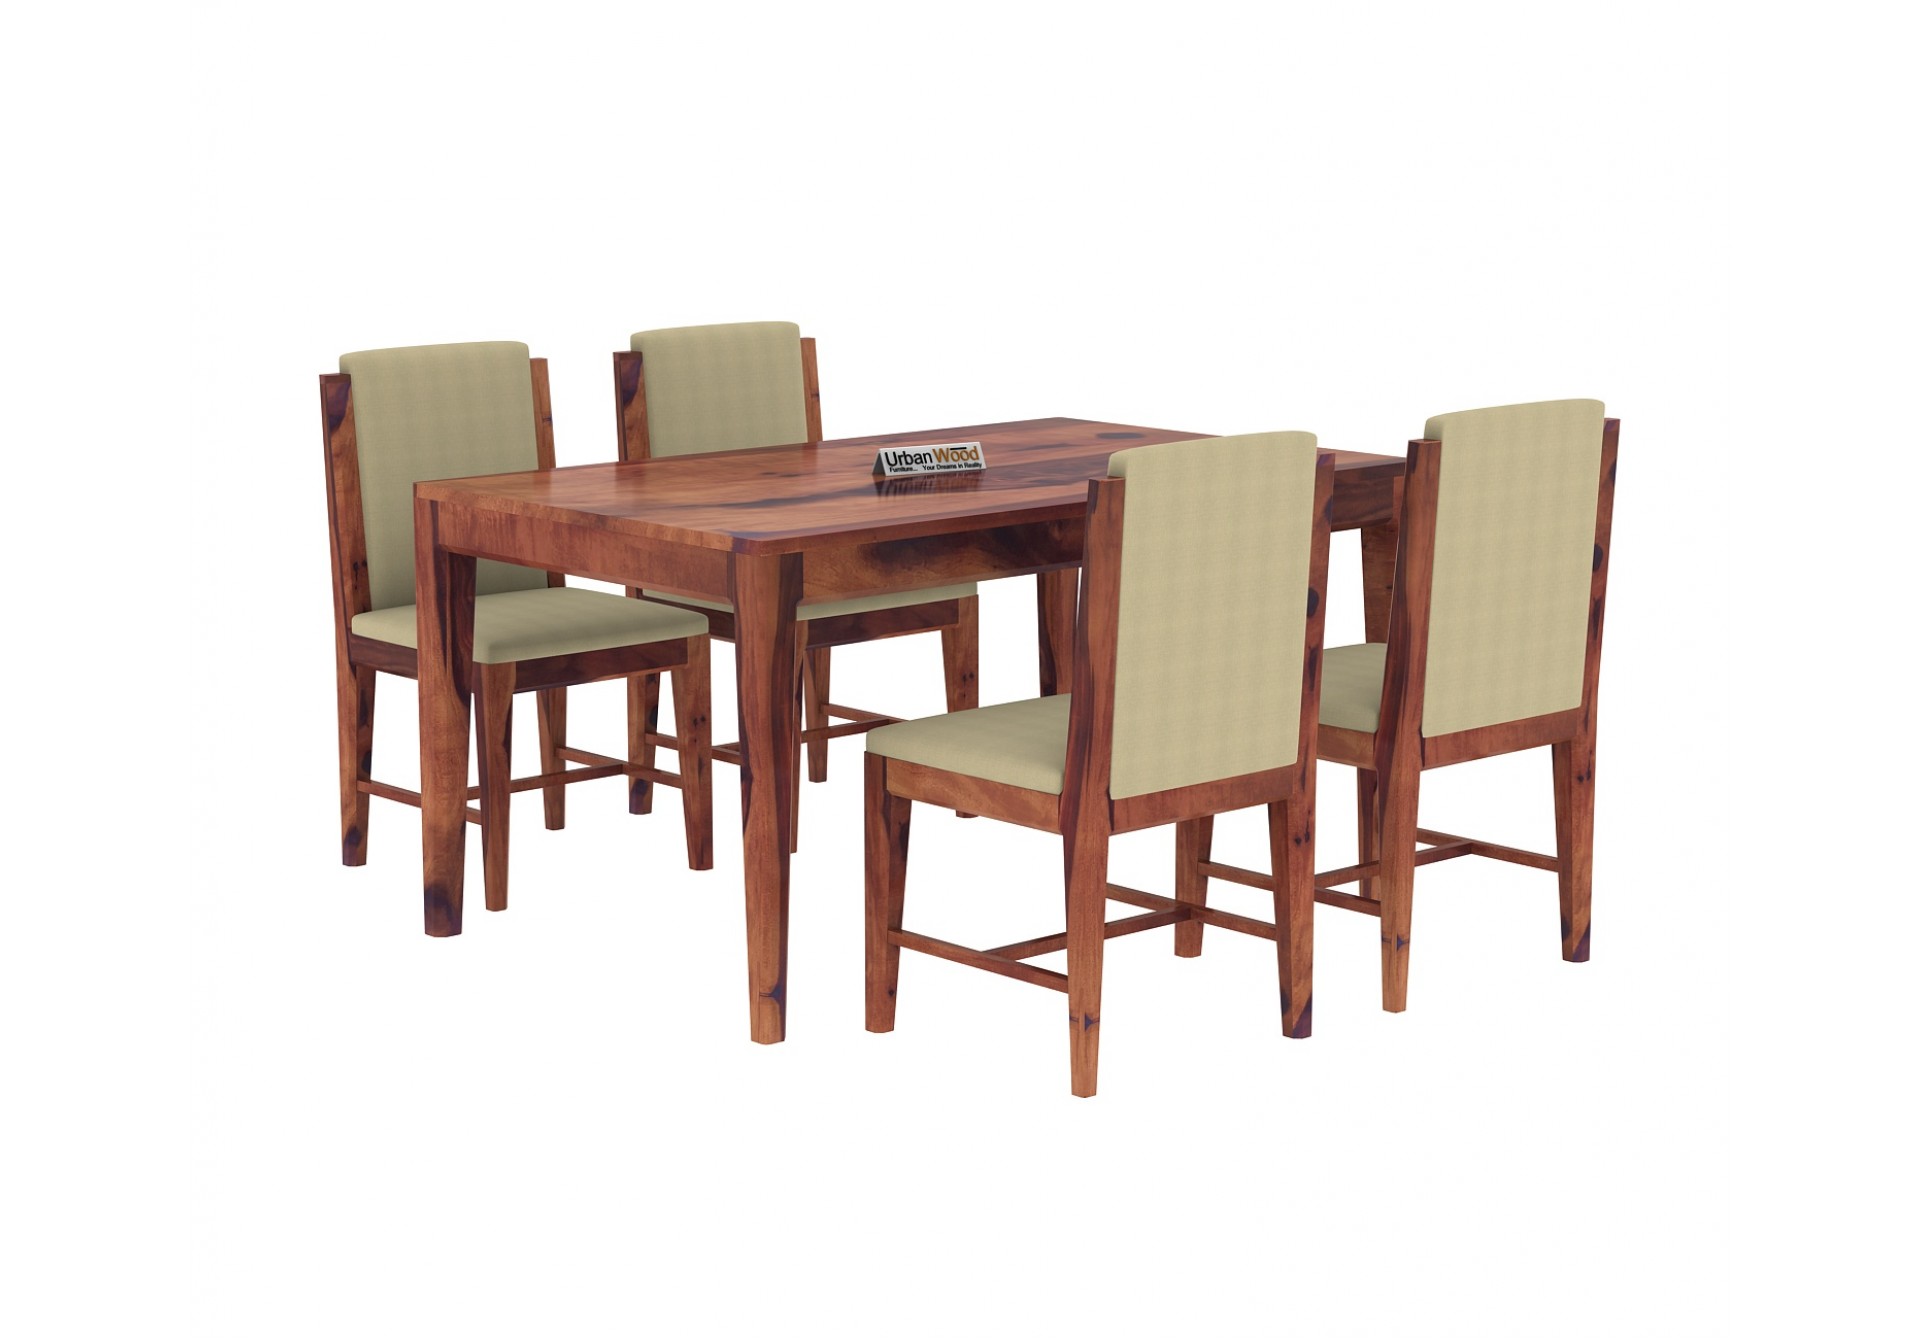 Buy Deck 4-Seater Dining table set (Teak Finish) Online India : Urbanwood